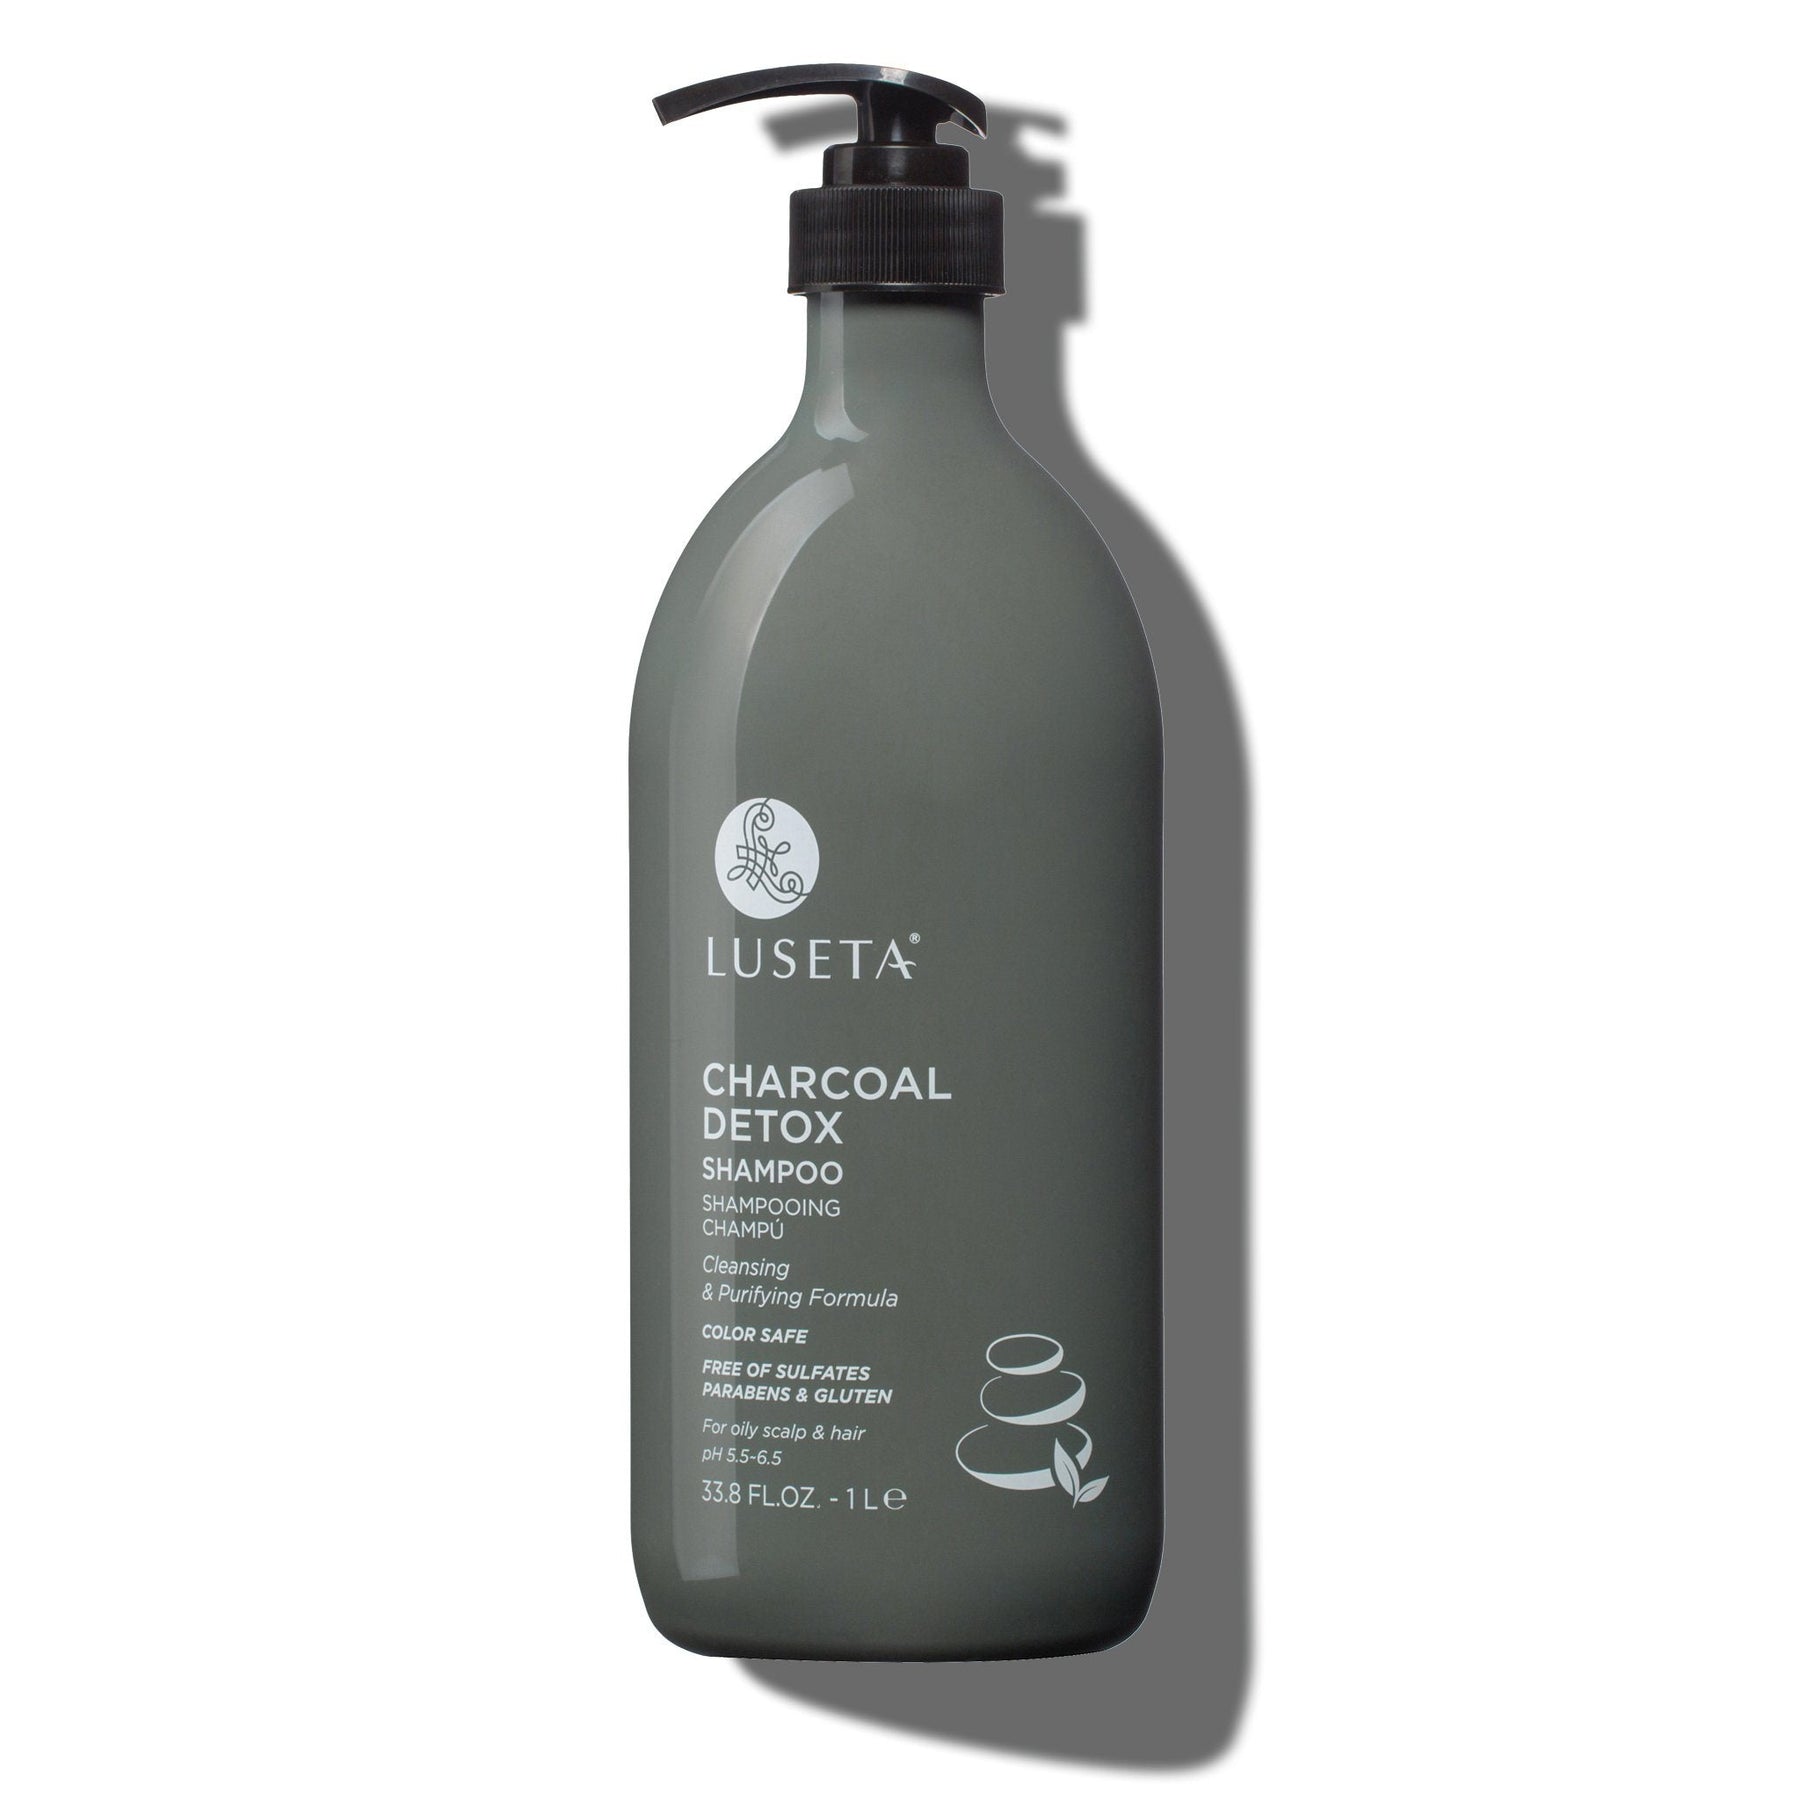 Charcoal Detox Shampoo - 33.8oz - by Luseta Beauty |ProCare Outlet|